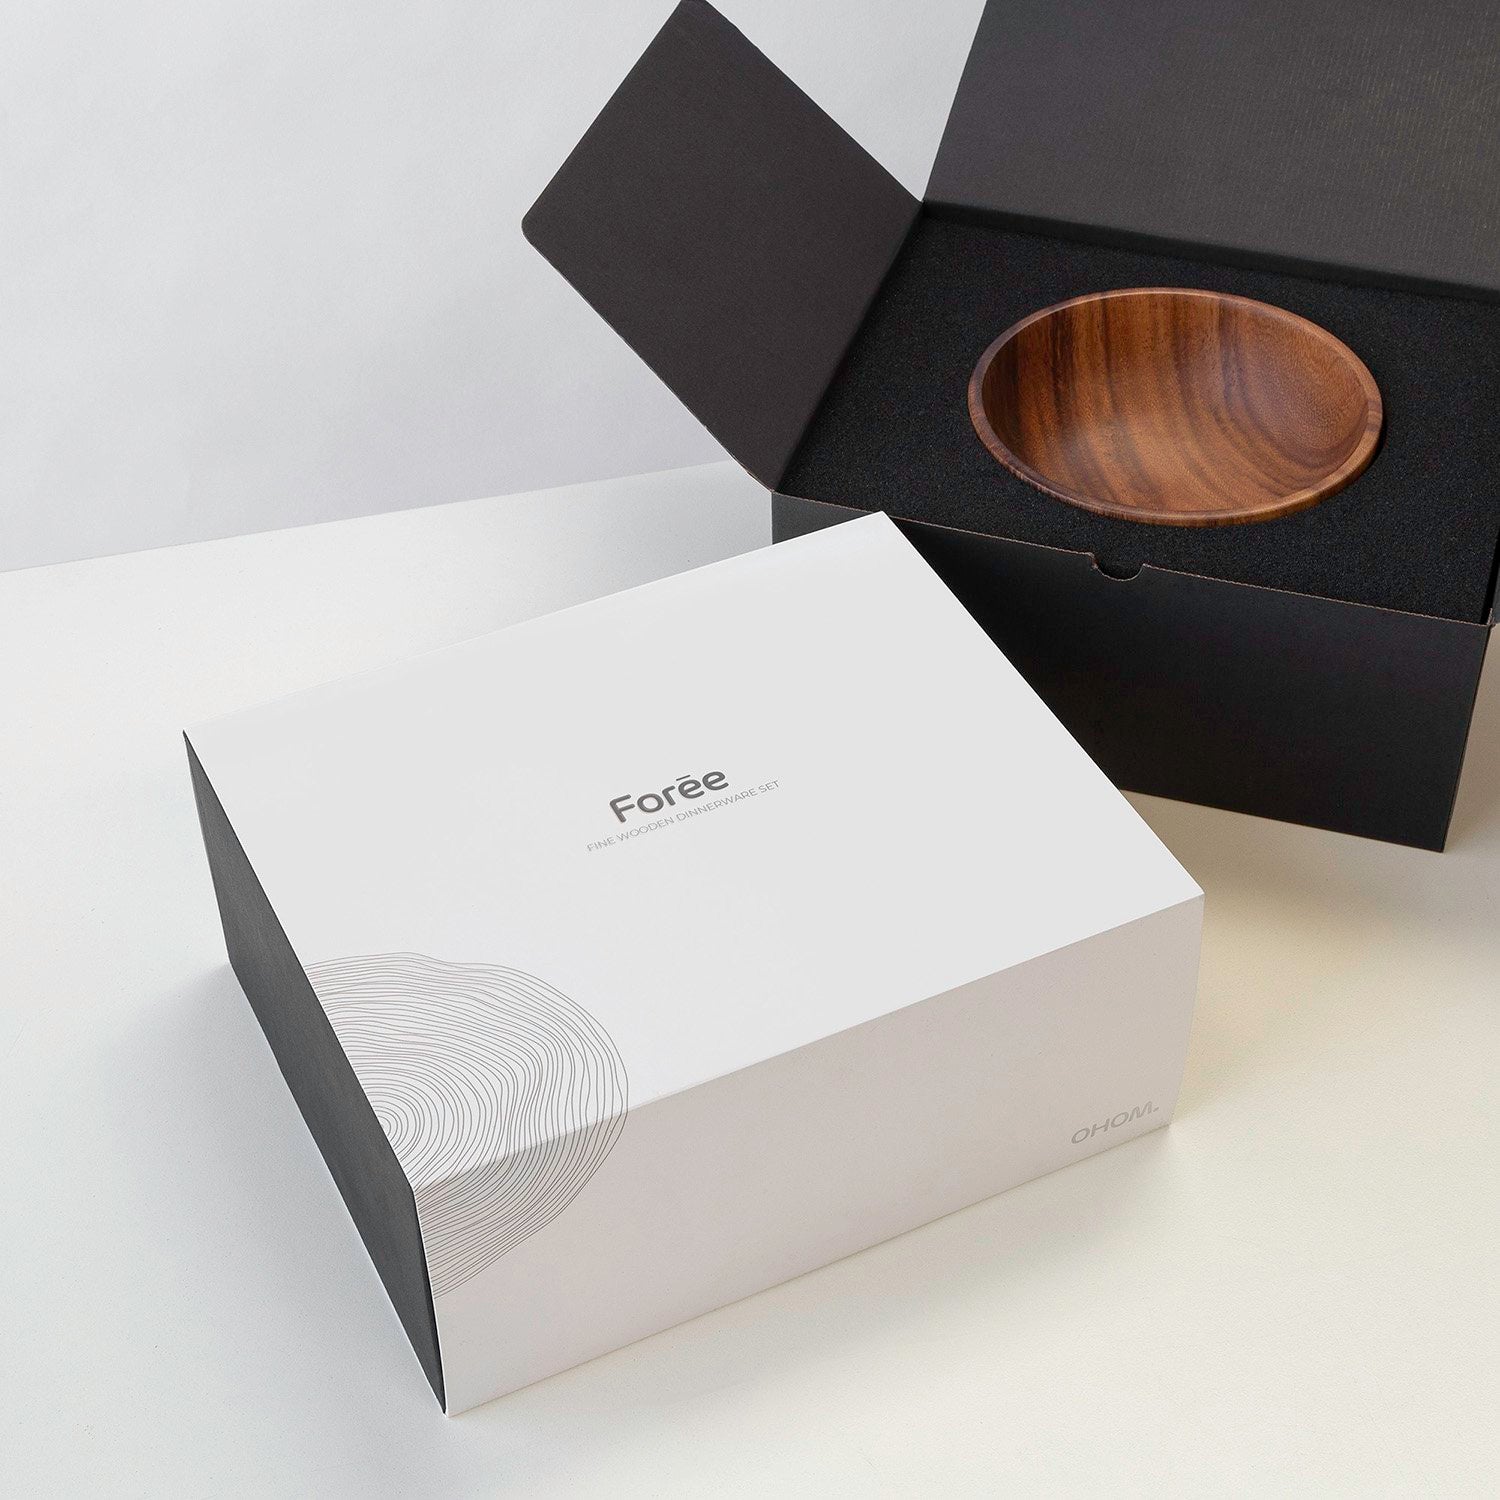 Wooden bowl in packaging